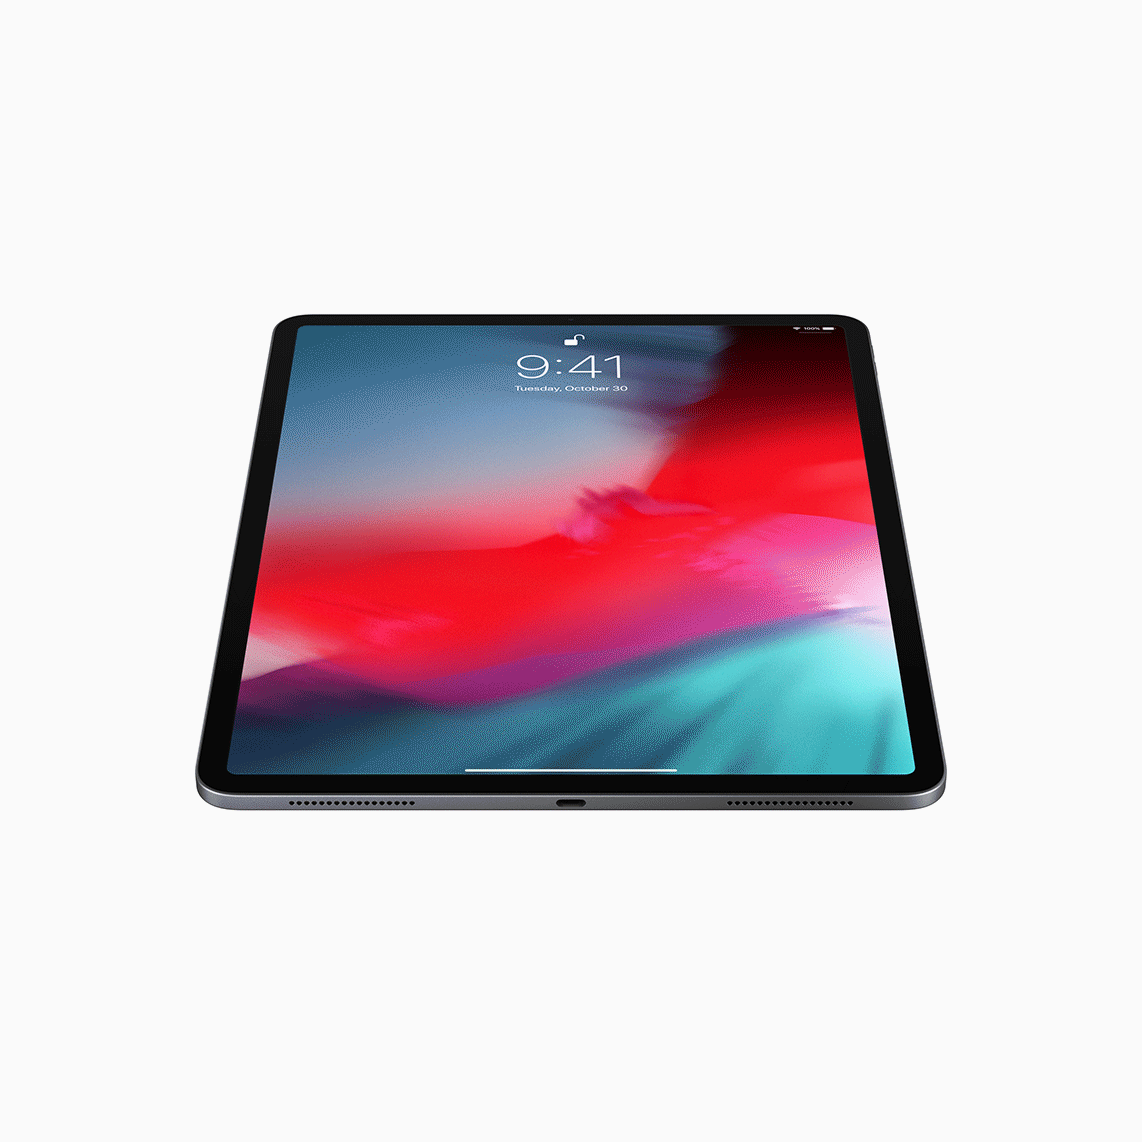 iPad Pro display change 10302018